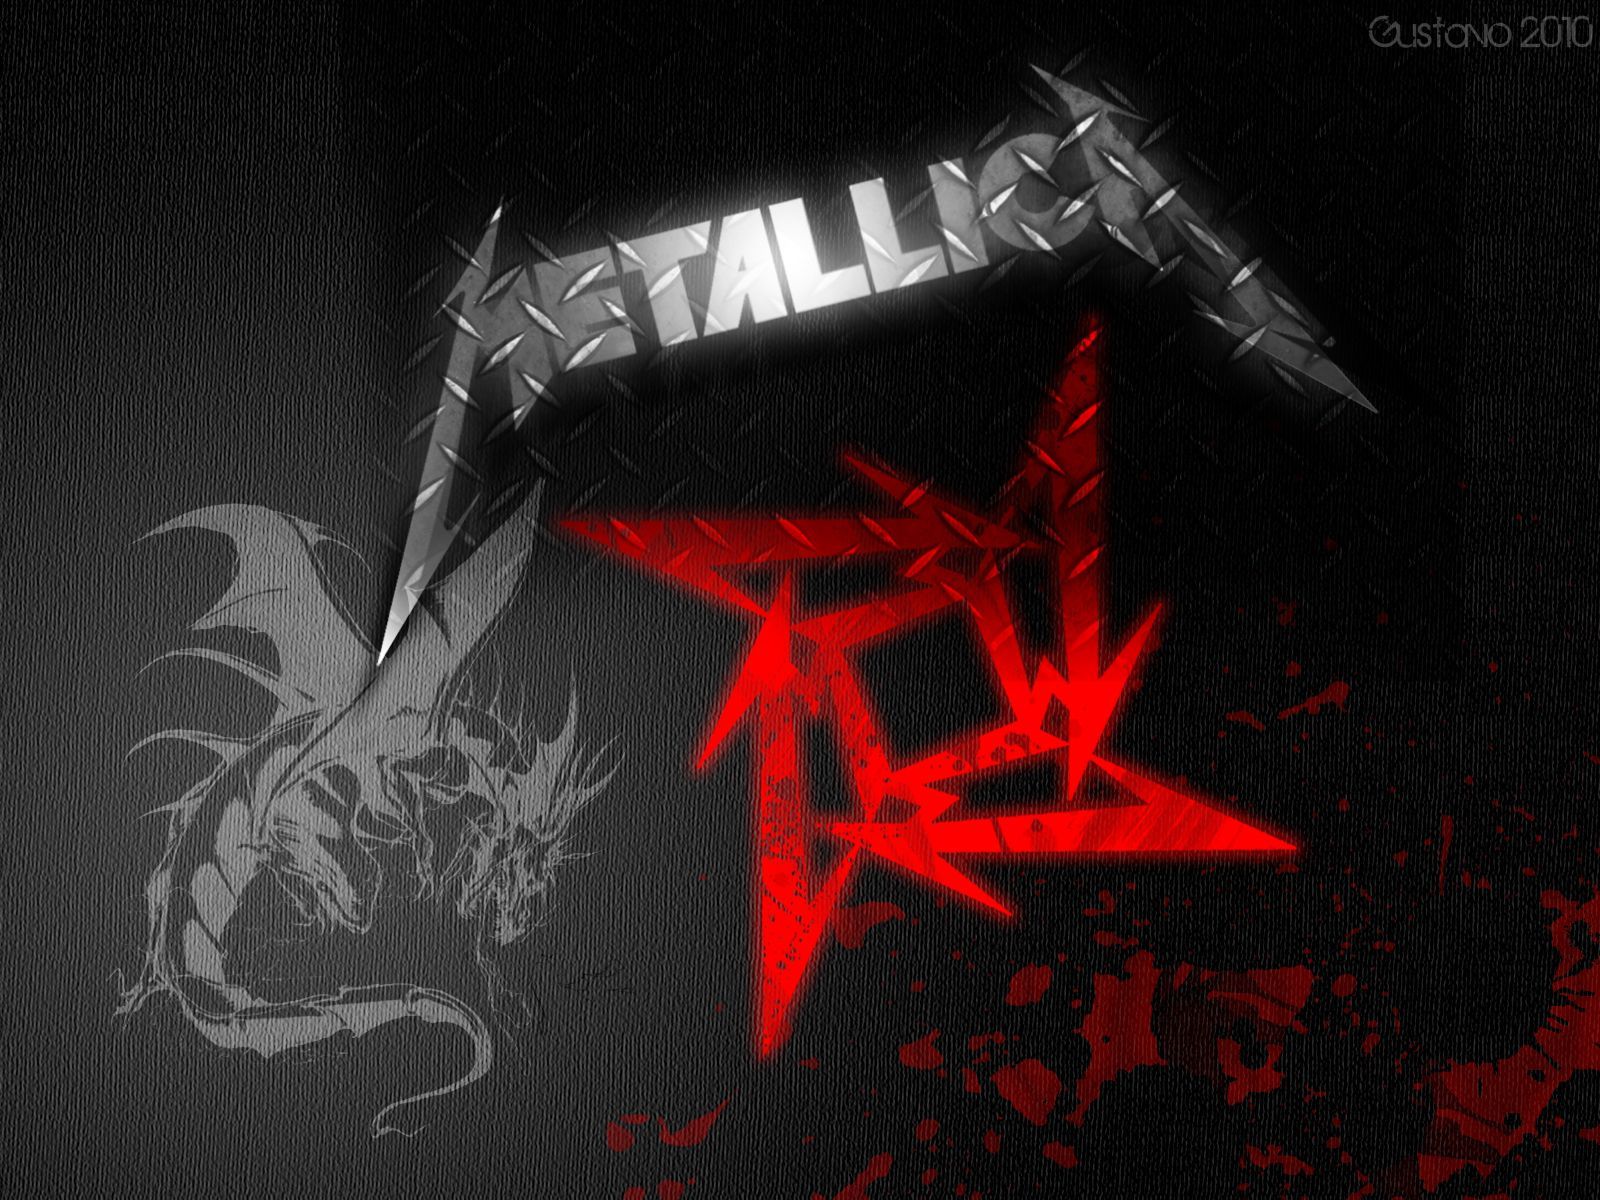 1 Awesome Metallica wallpaper | Metallica wallpapers 527 ...